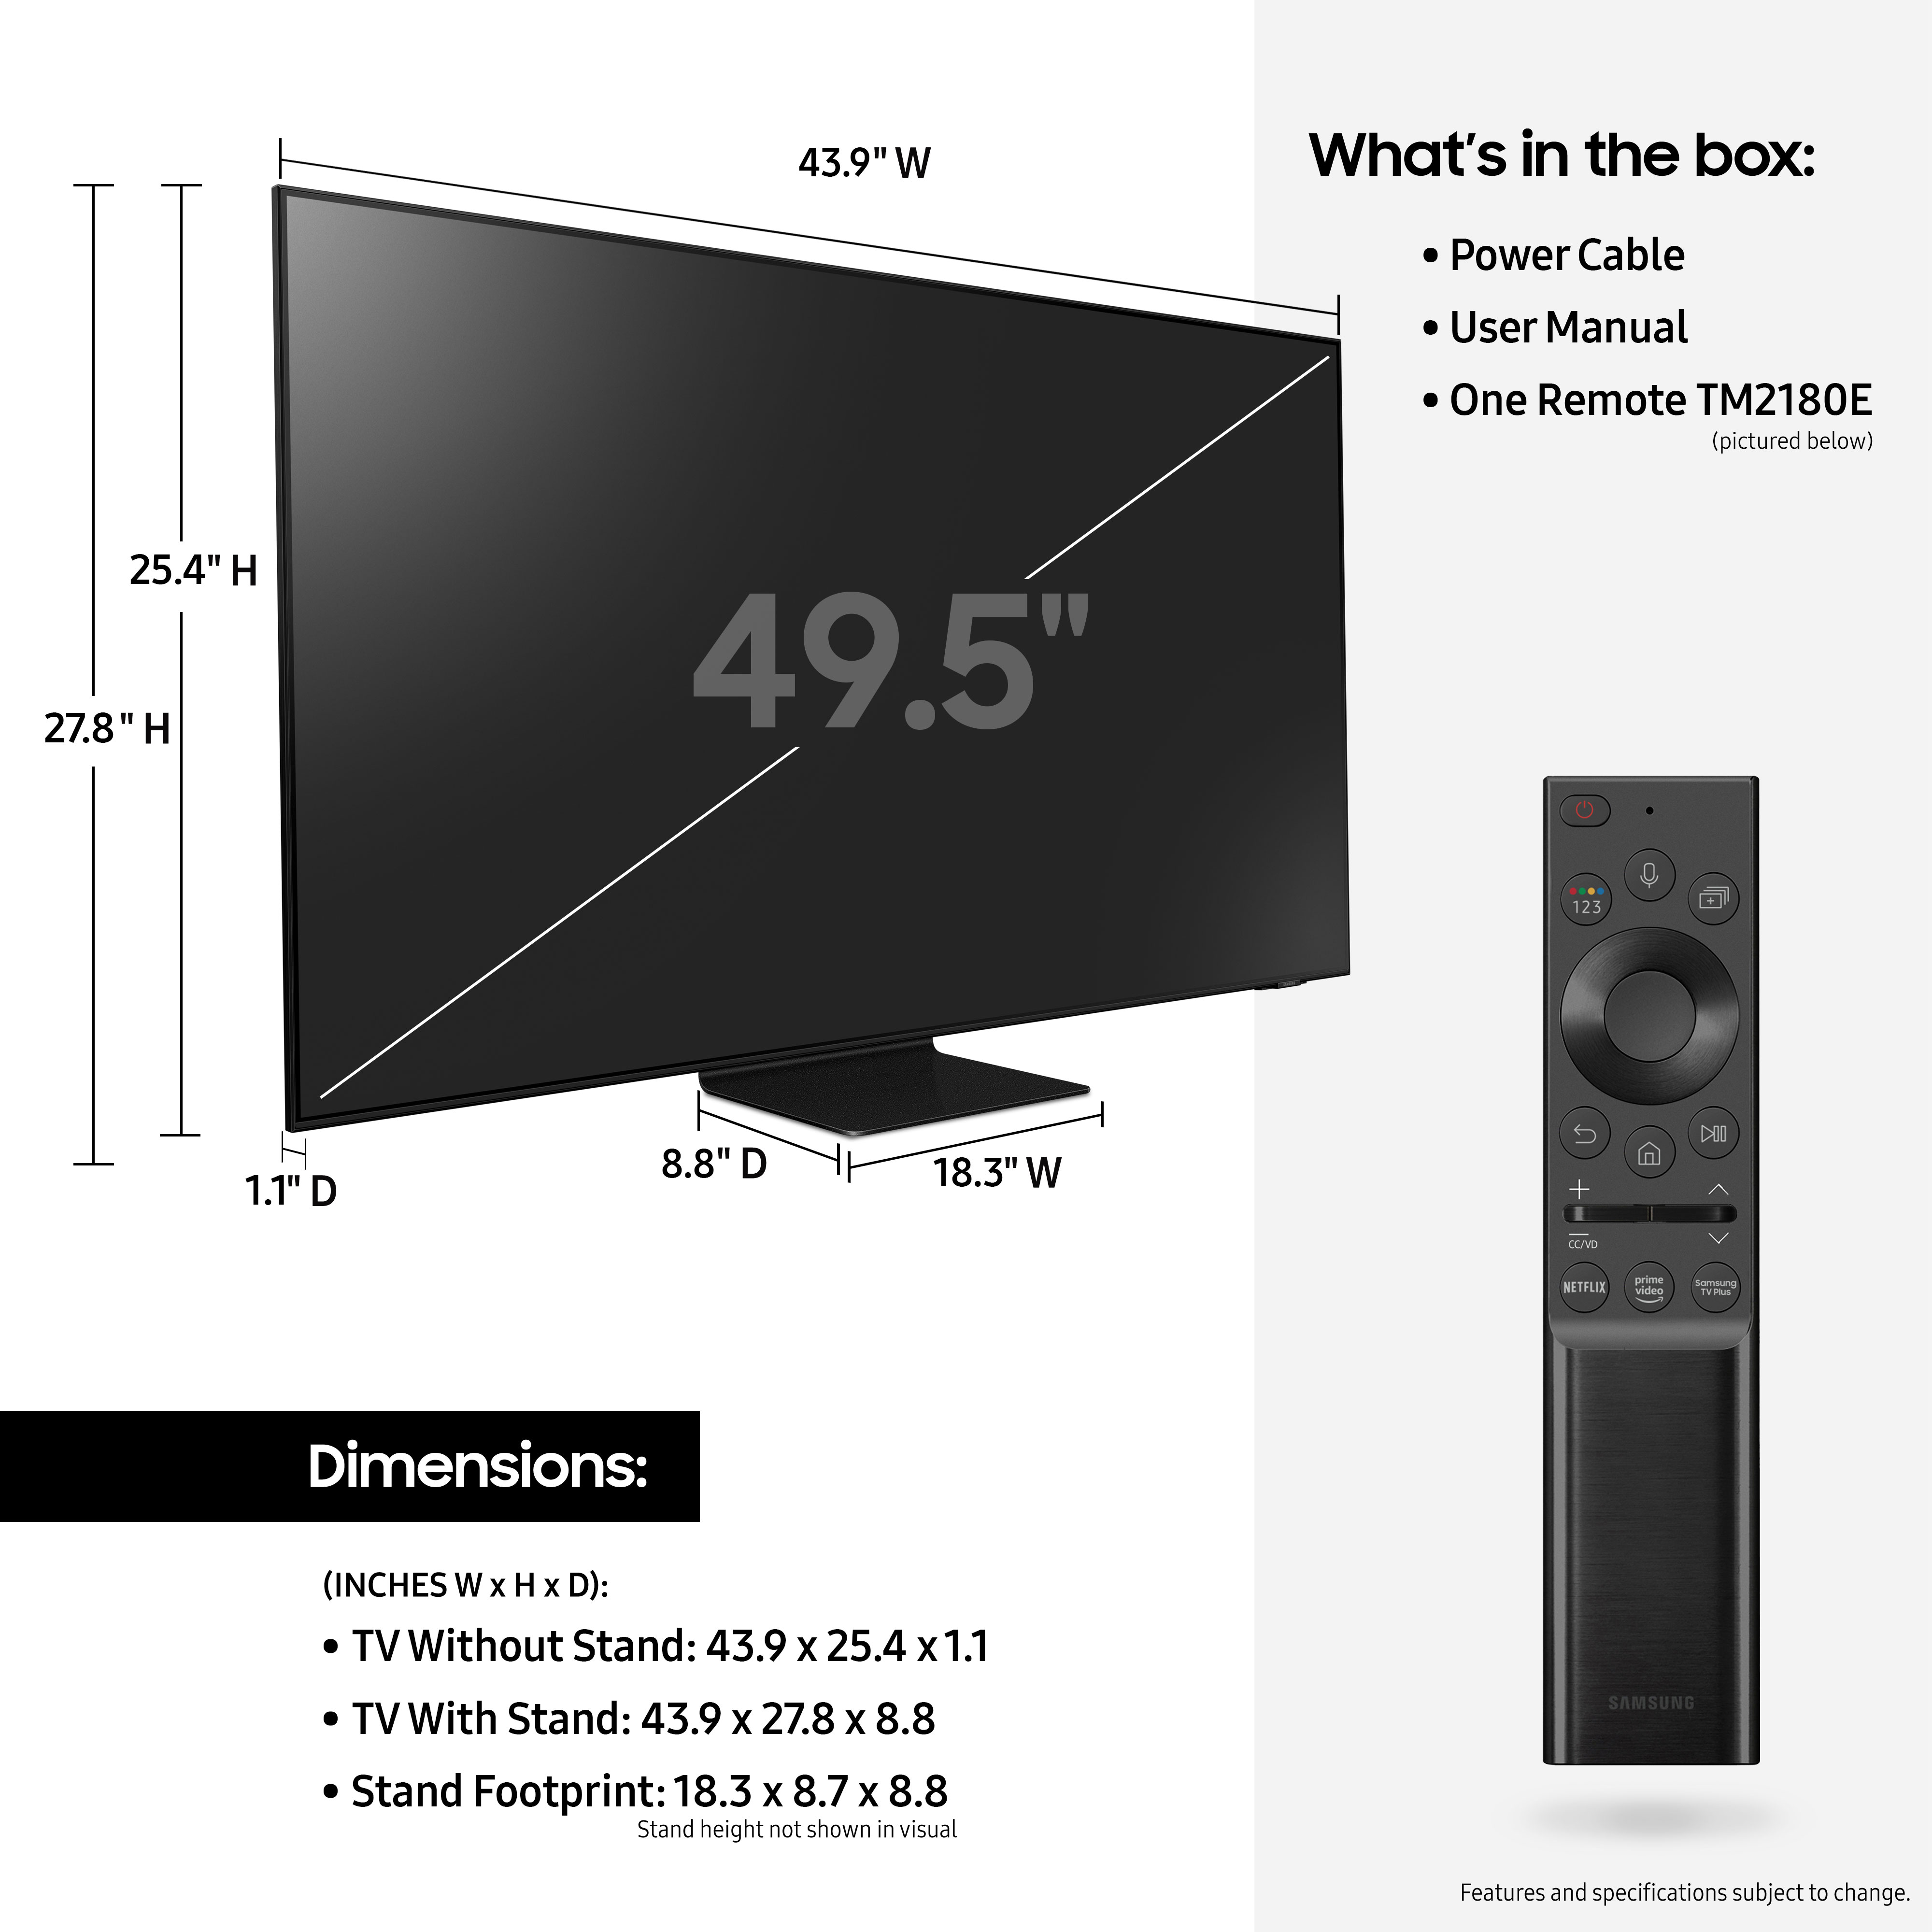 TV Neo QLED 108cm (50) Samsung TQ50QN90CAT Quantum Matrix